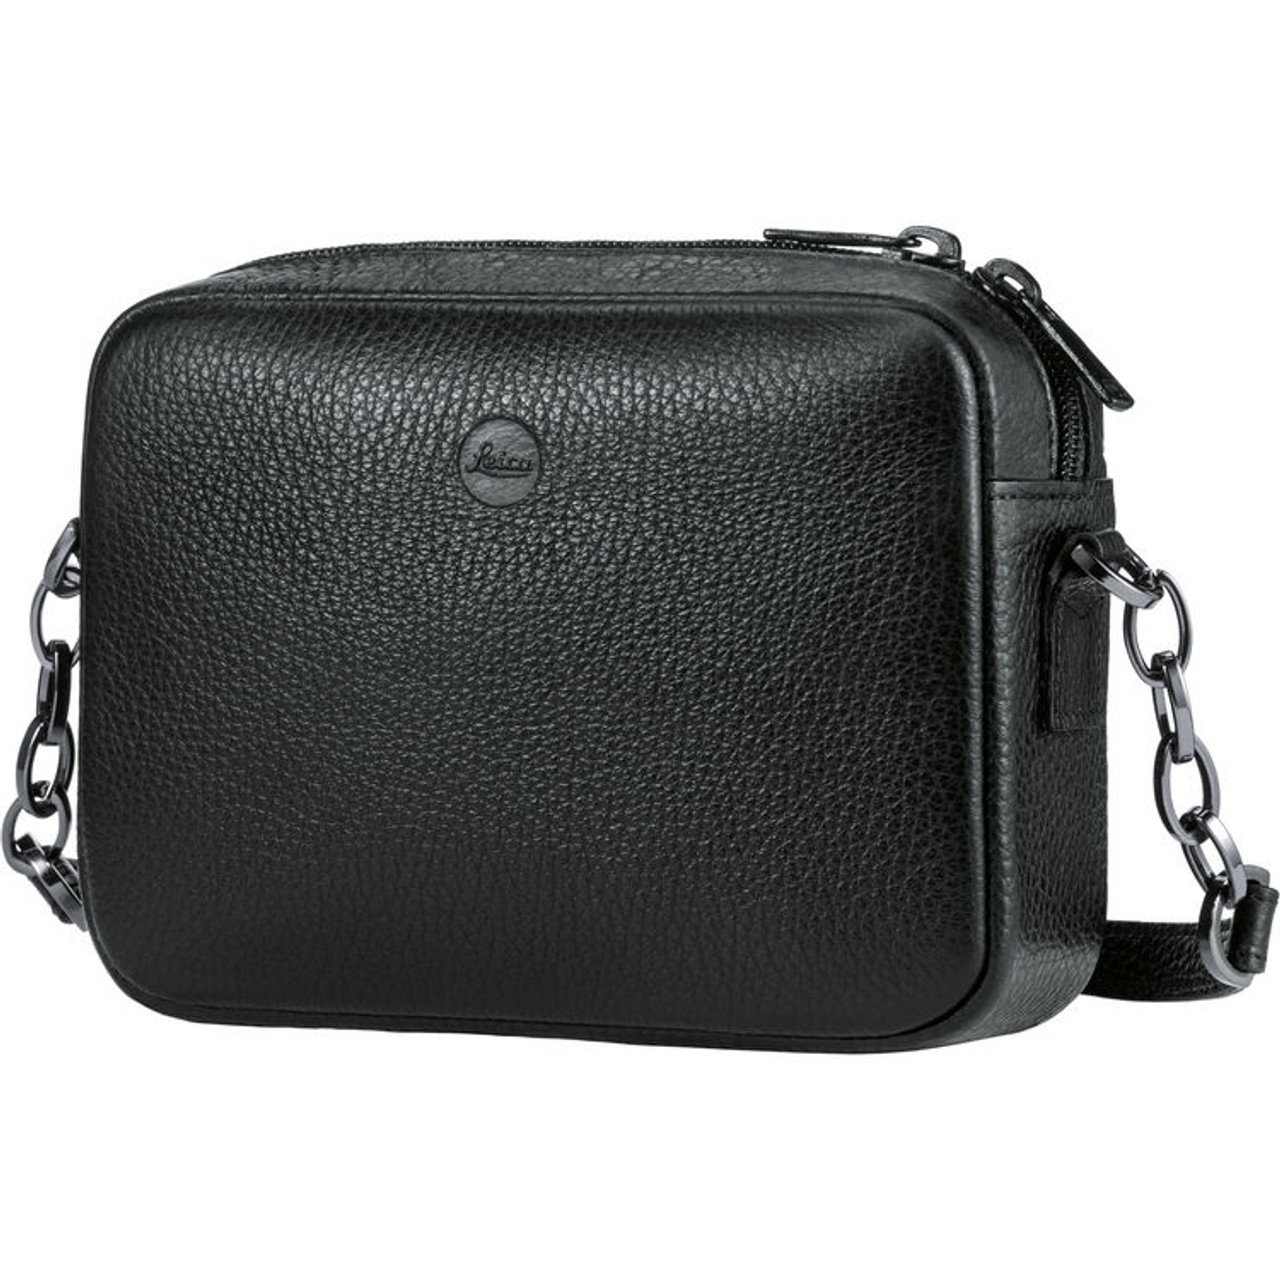 Handbag Andrea C-Lux, leather, cemento